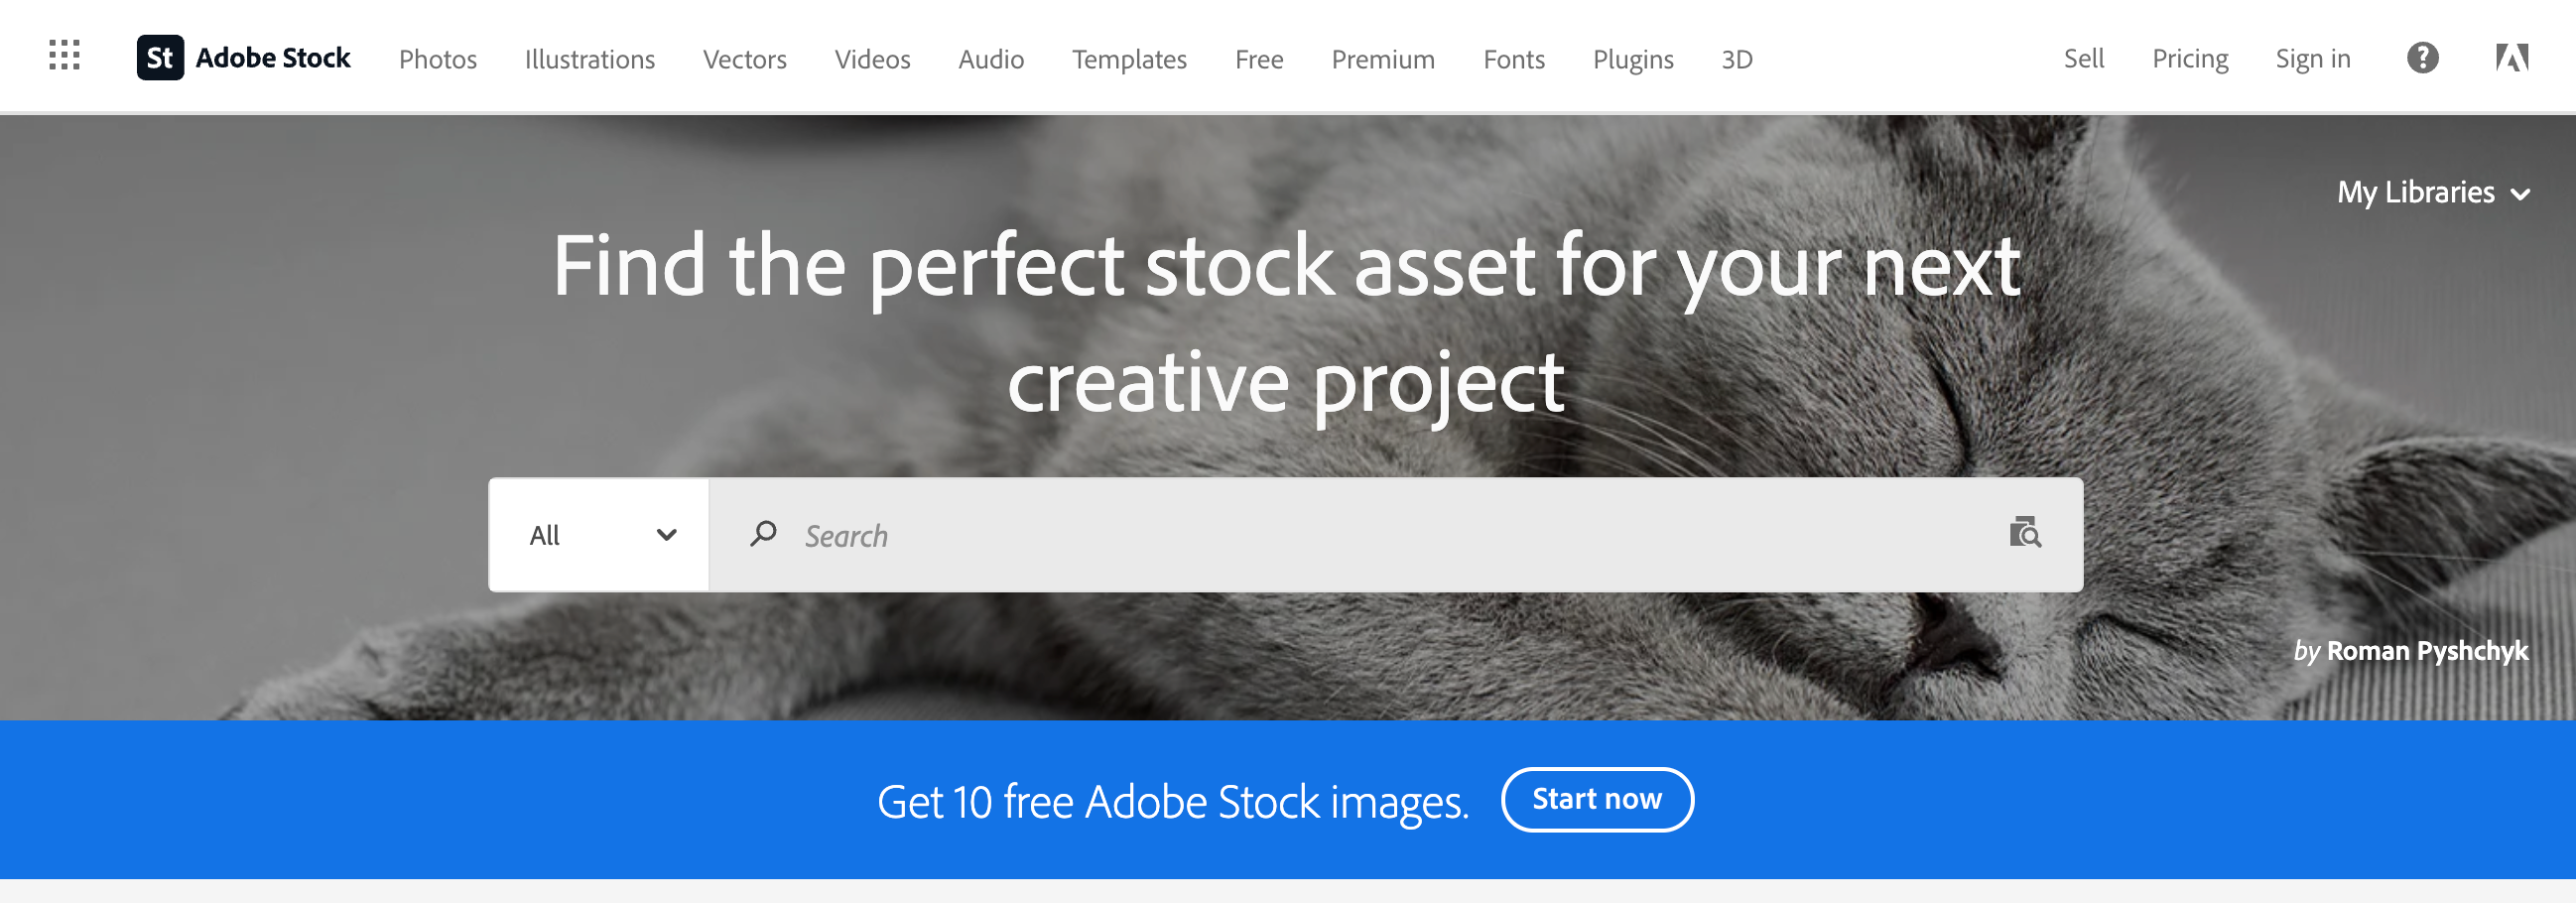 Screenshot of the Adobe Stock homepage